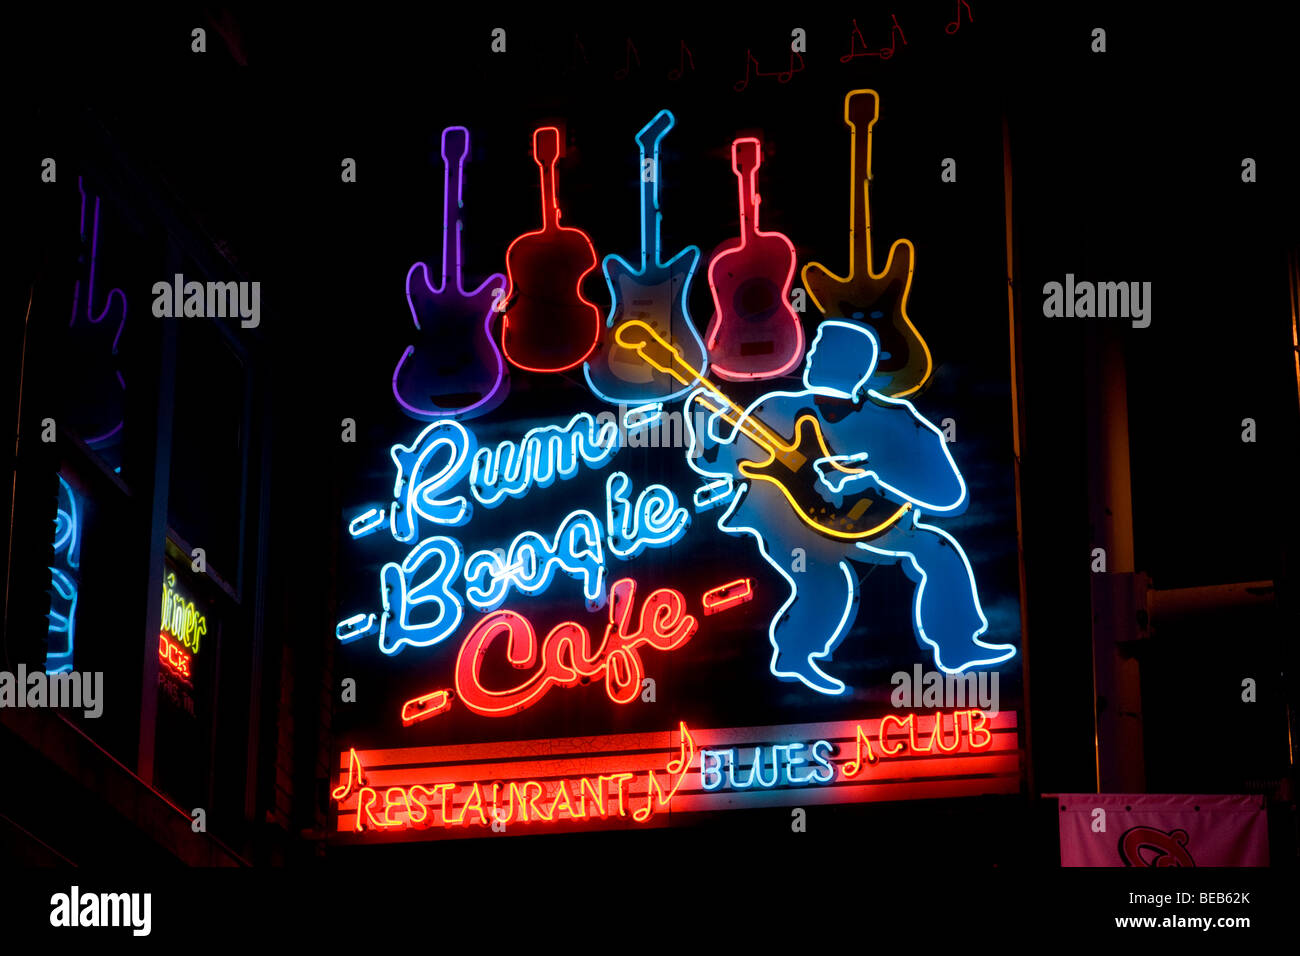 Il Rum Boogie Cafe Restaurant & Blues Club insegna al neon di notte, Beale St, Memphis, Tennessee, Stati Uniti d'America Foto Stock